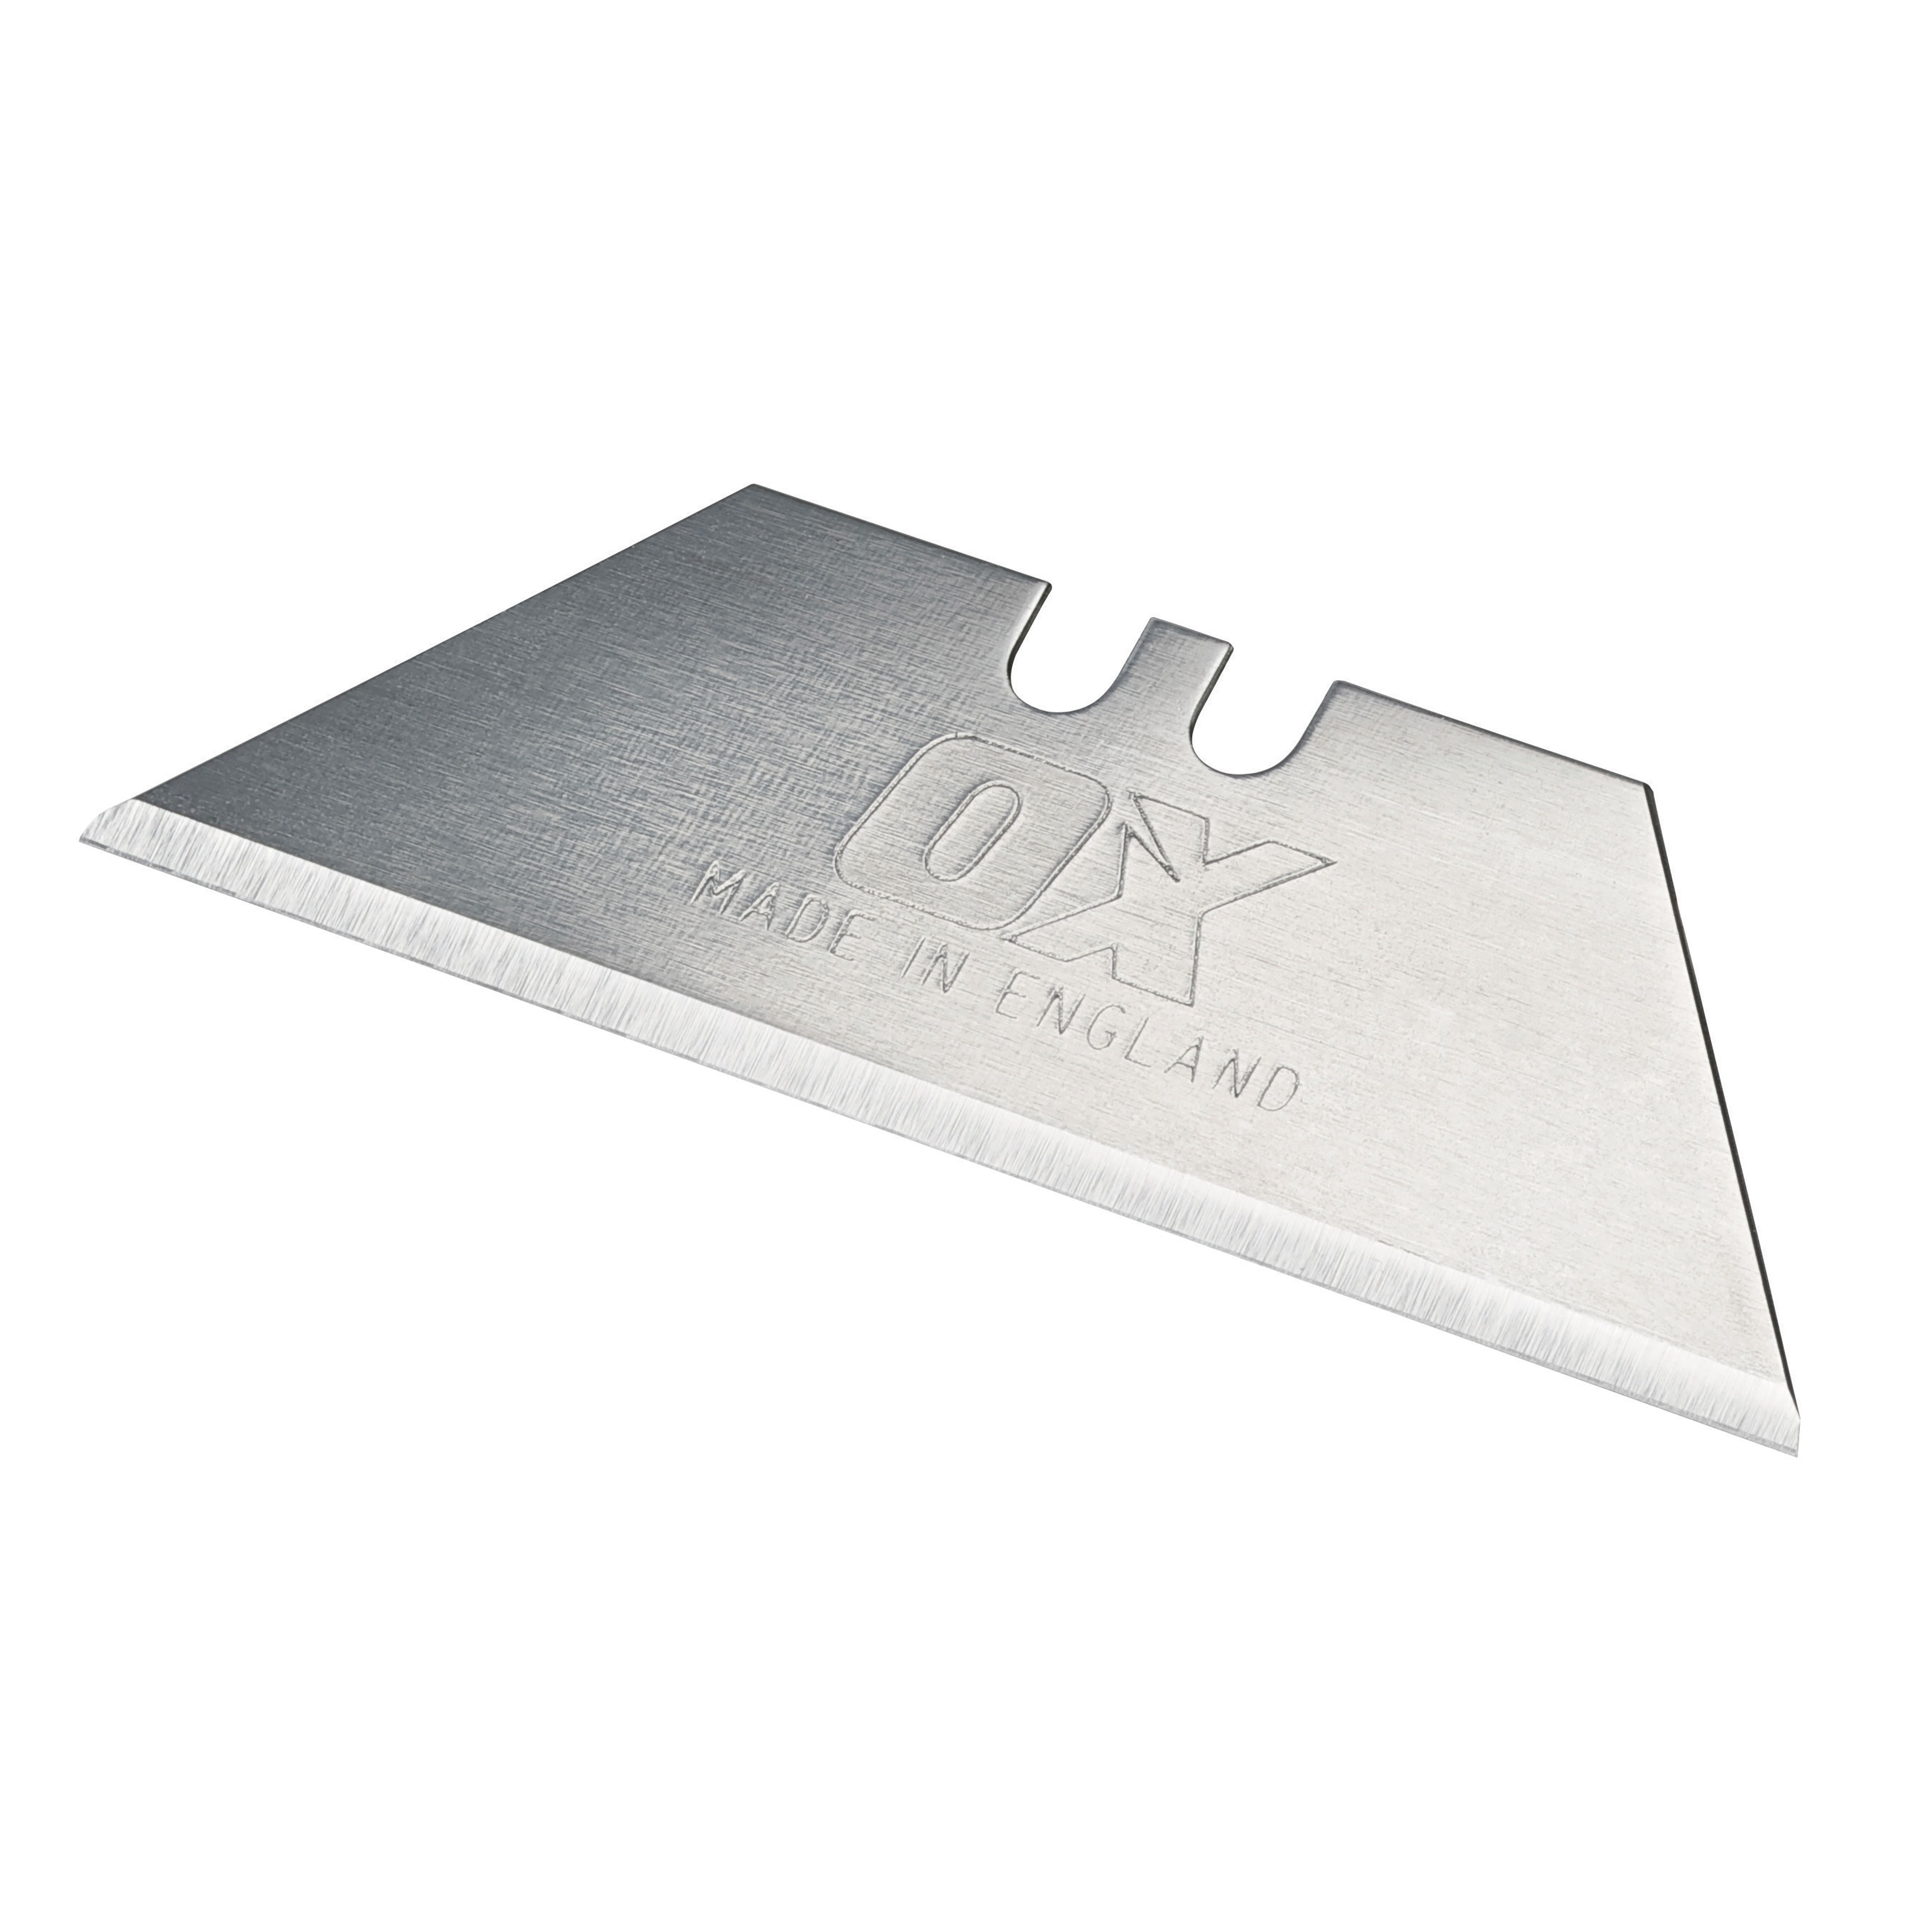 OX 20mm Steel Knife blade, Pack of 100